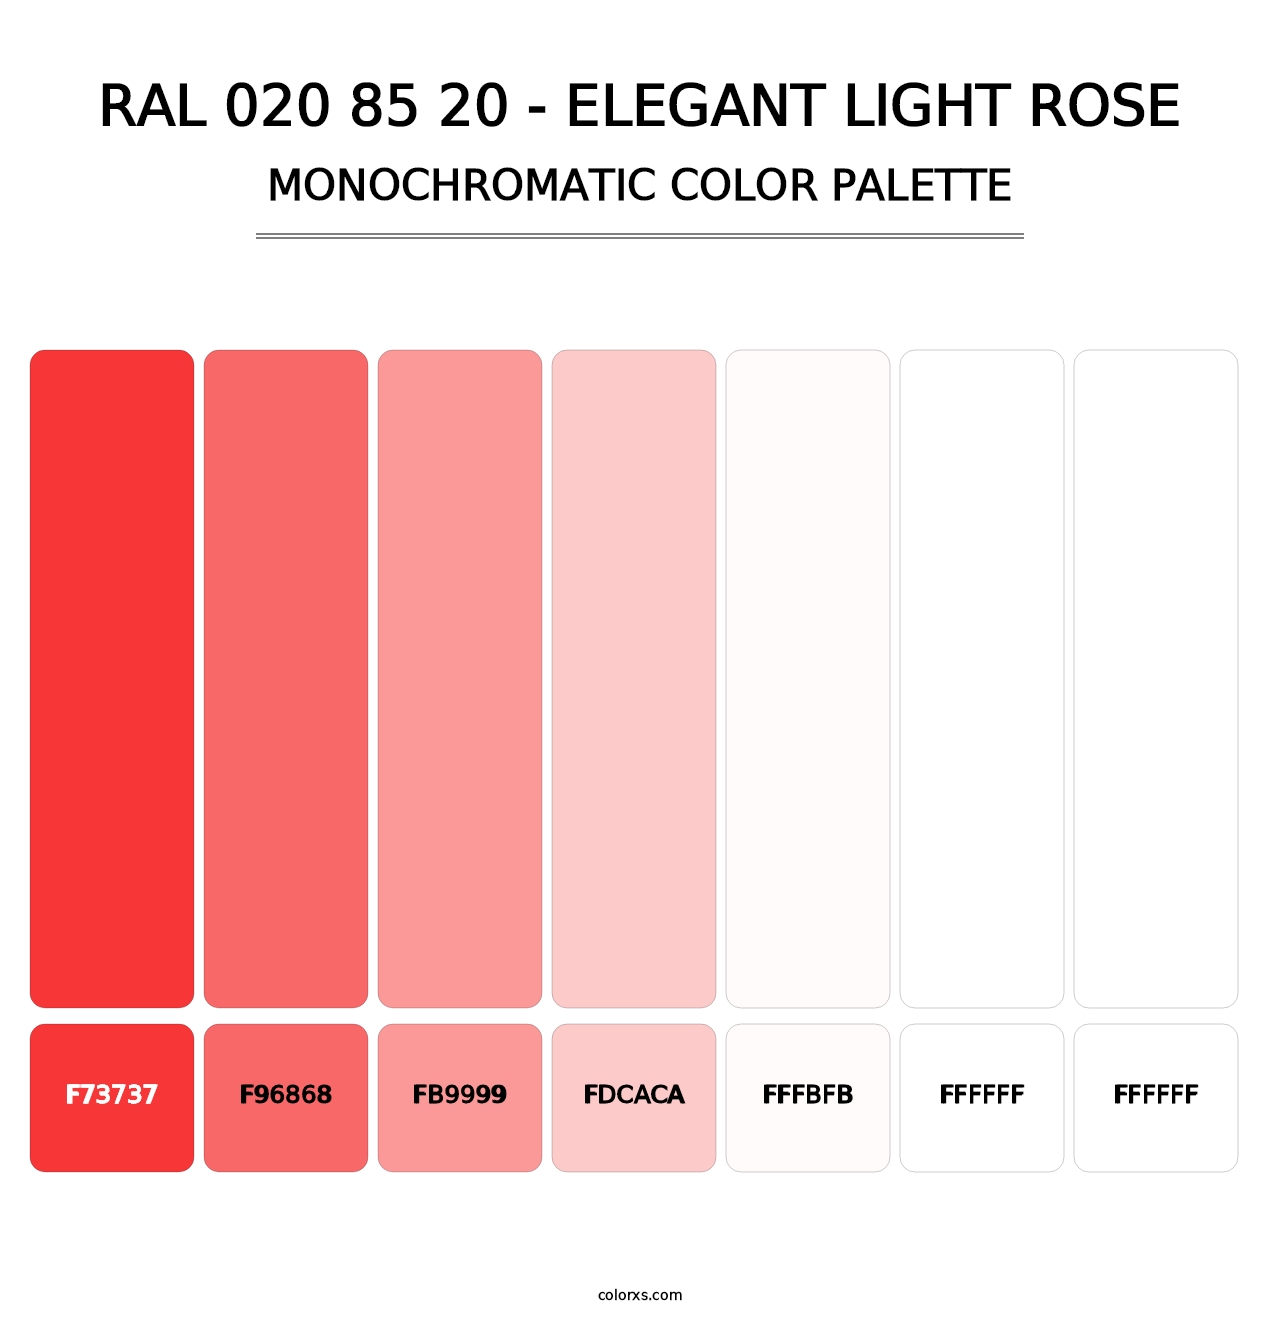 RAL 020 85 20 - Elegant Light Rose - Monochromatic Color Palette